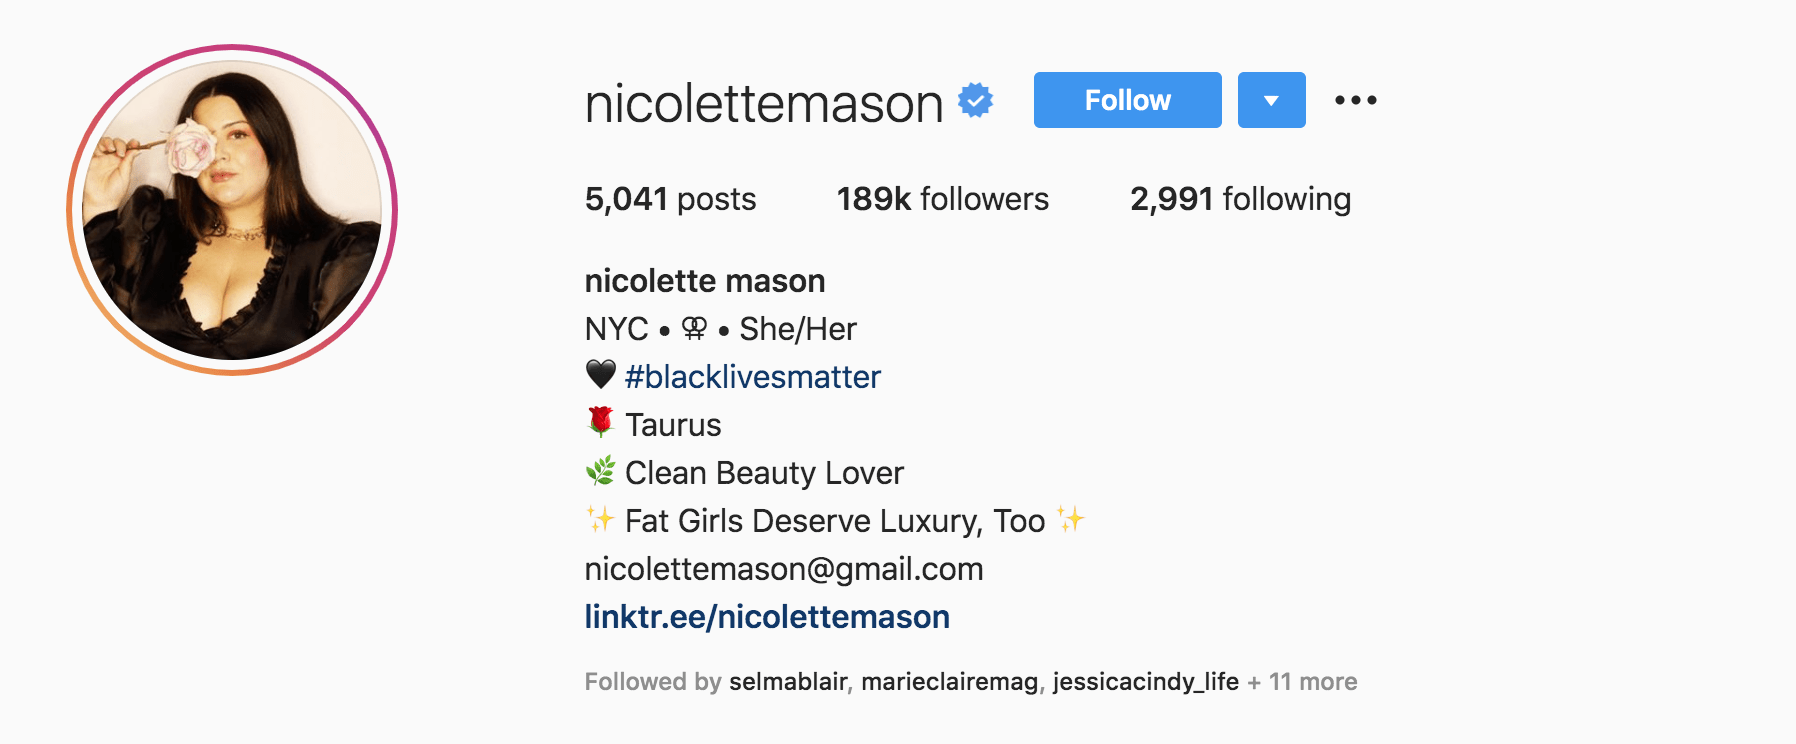 Top Fashion Influencers - Nicolette Mason